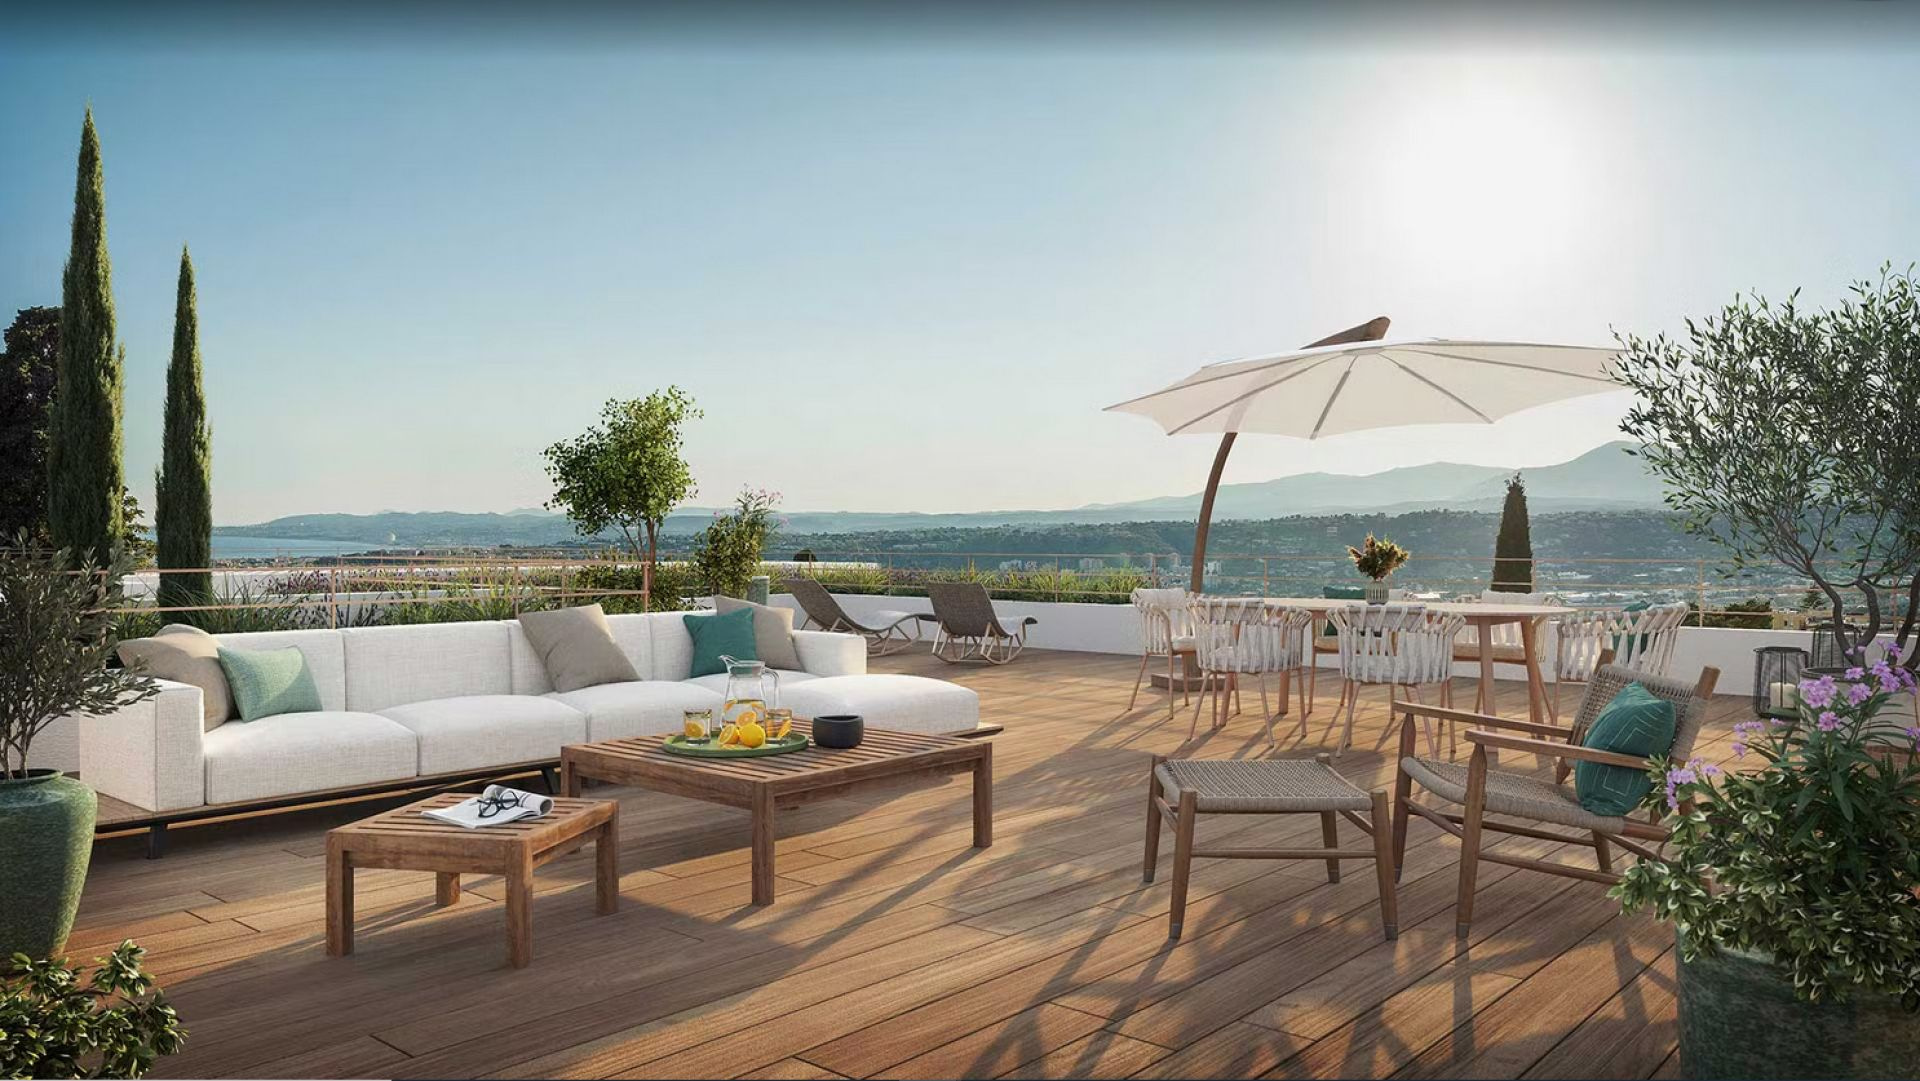 New 4-bedroom rooftop apartment in Nice